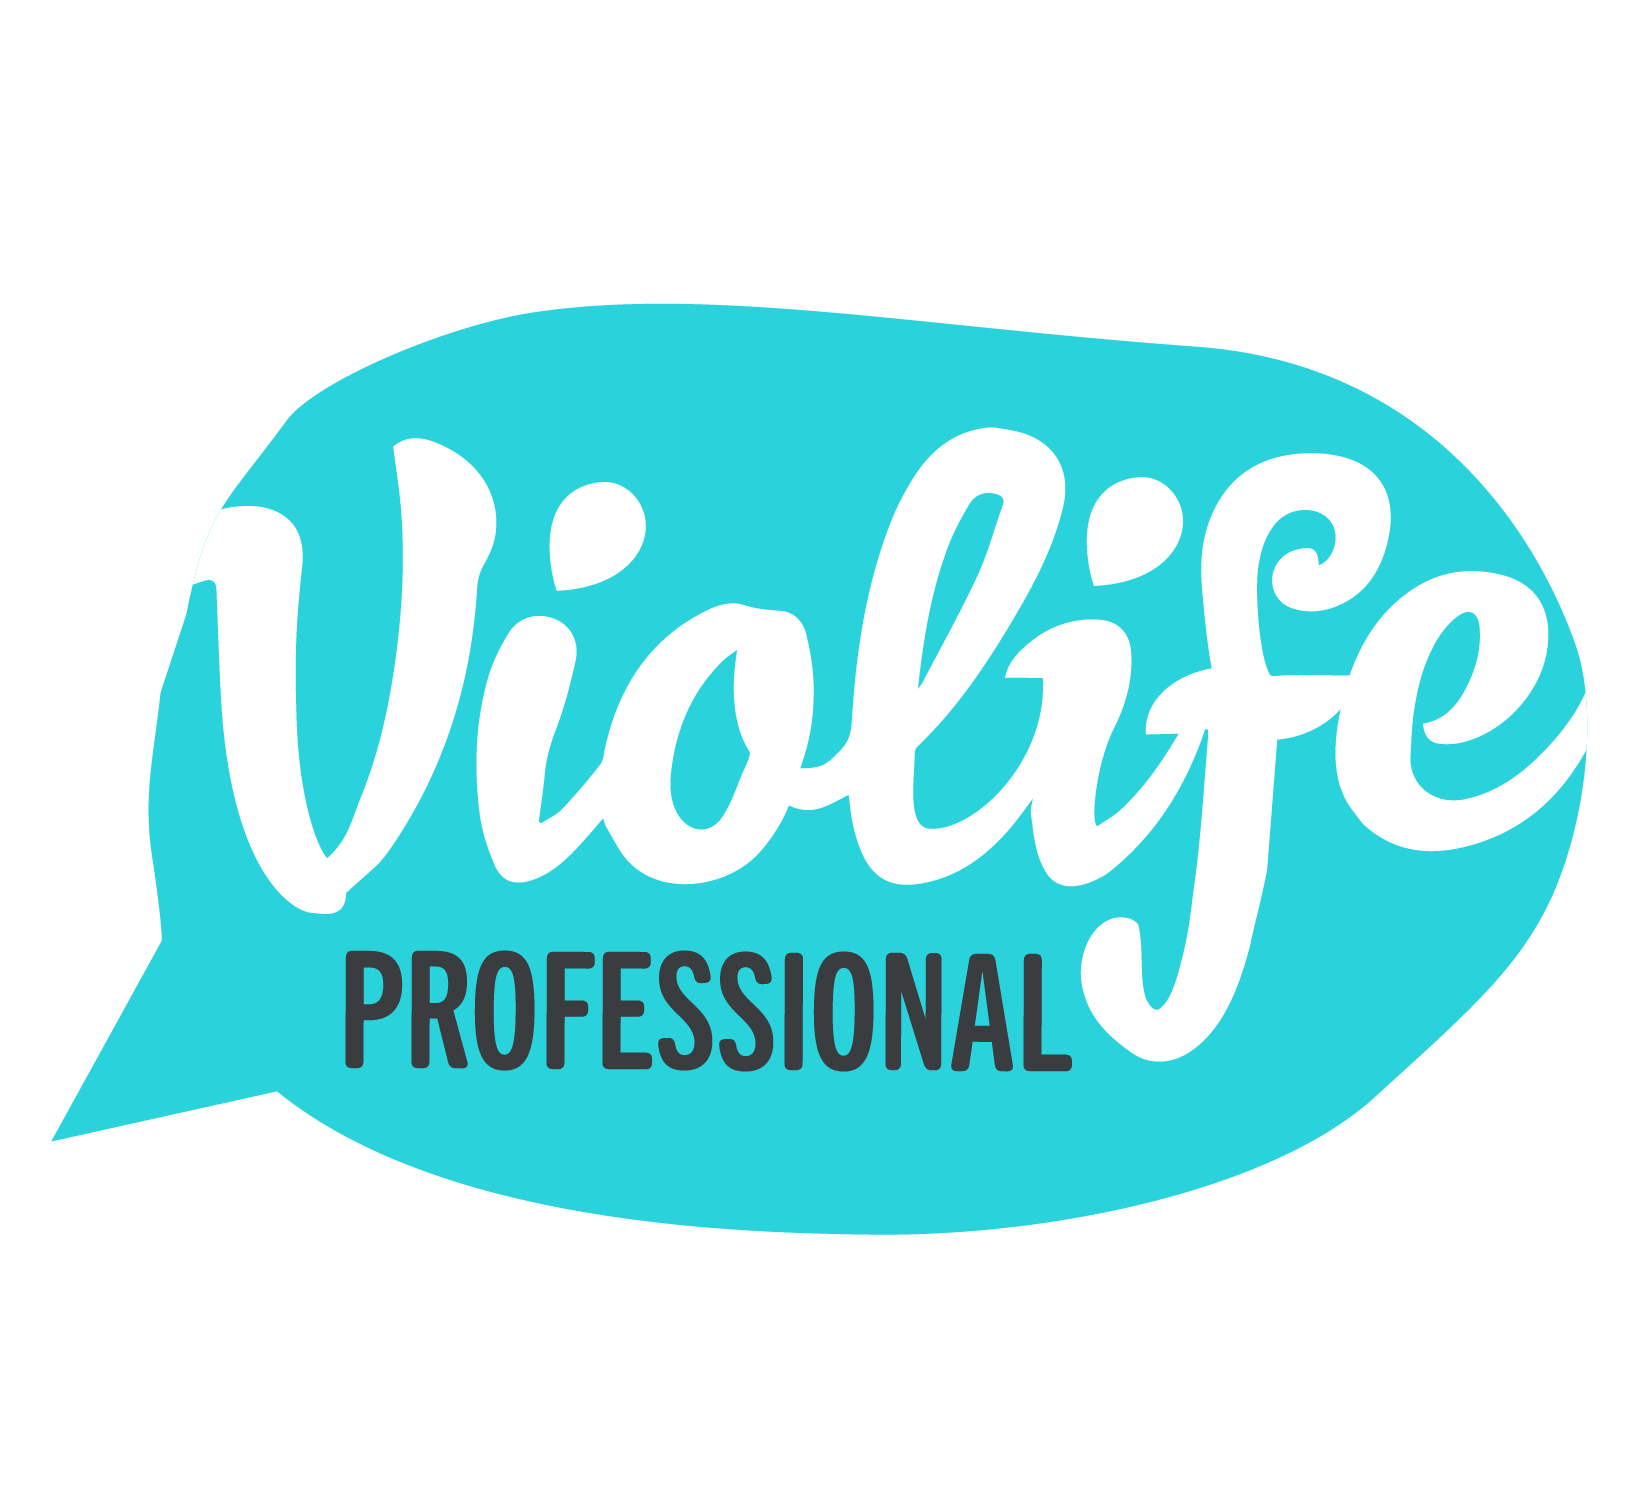 violife professional logo